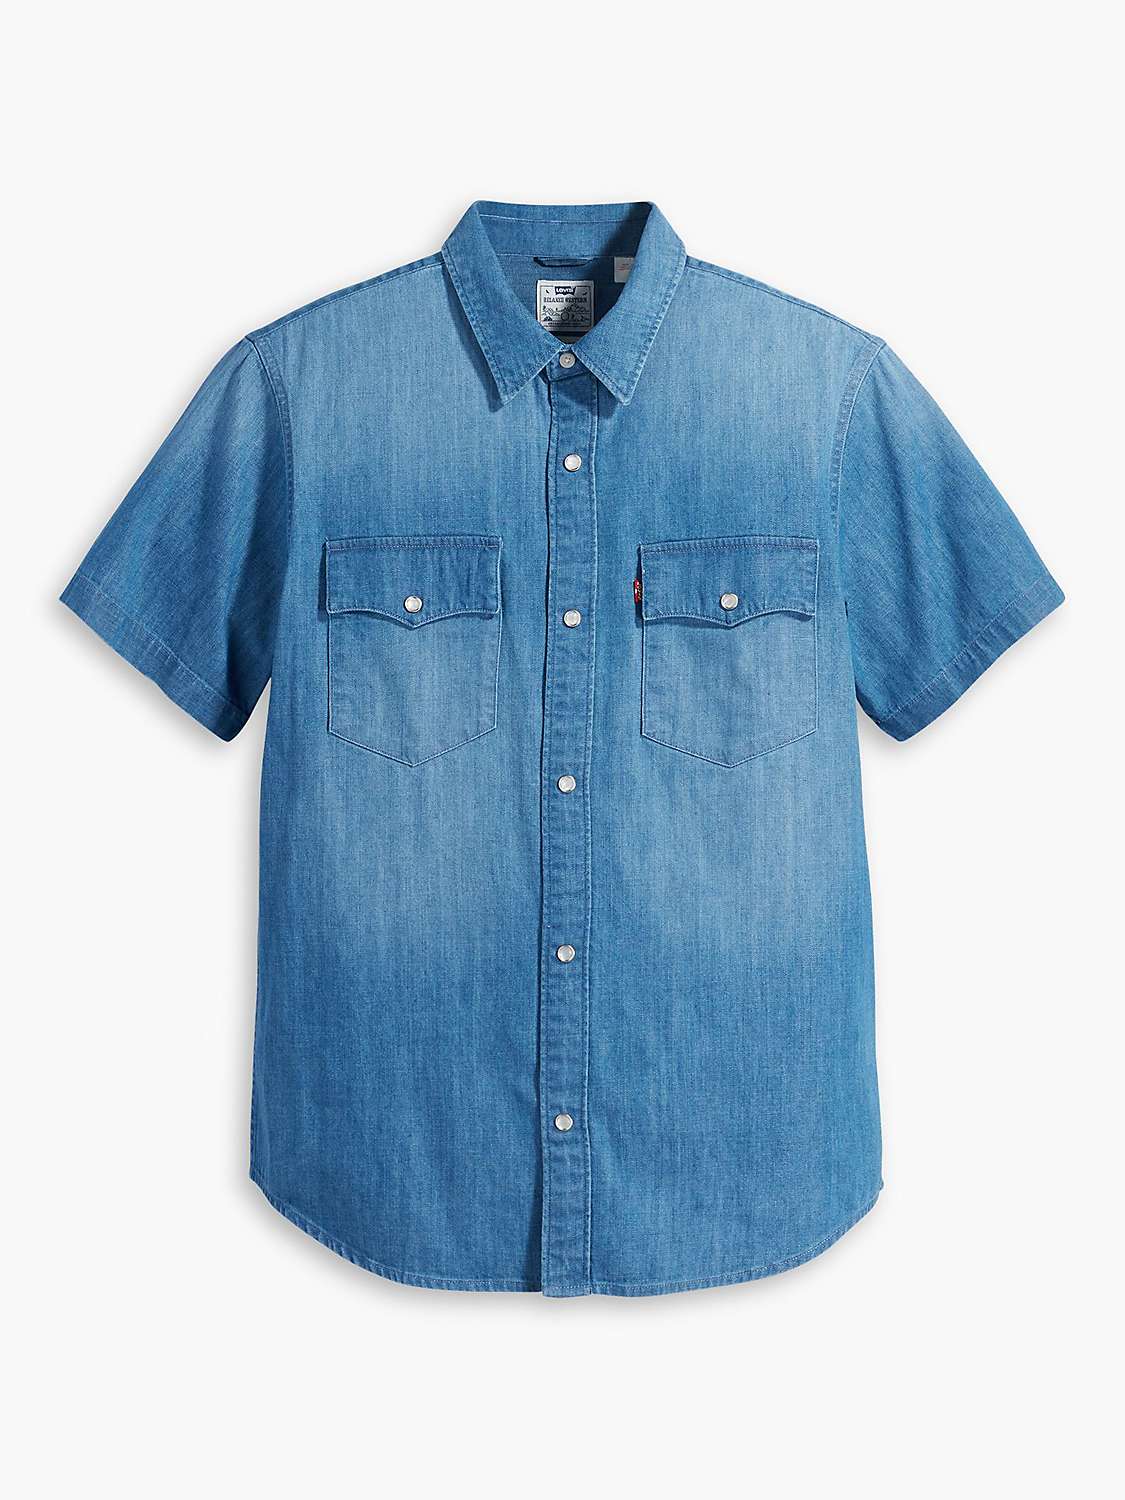 Buy Levi's Short Sleeve Denim Western Shirt, Denim Online at johnlewis.com